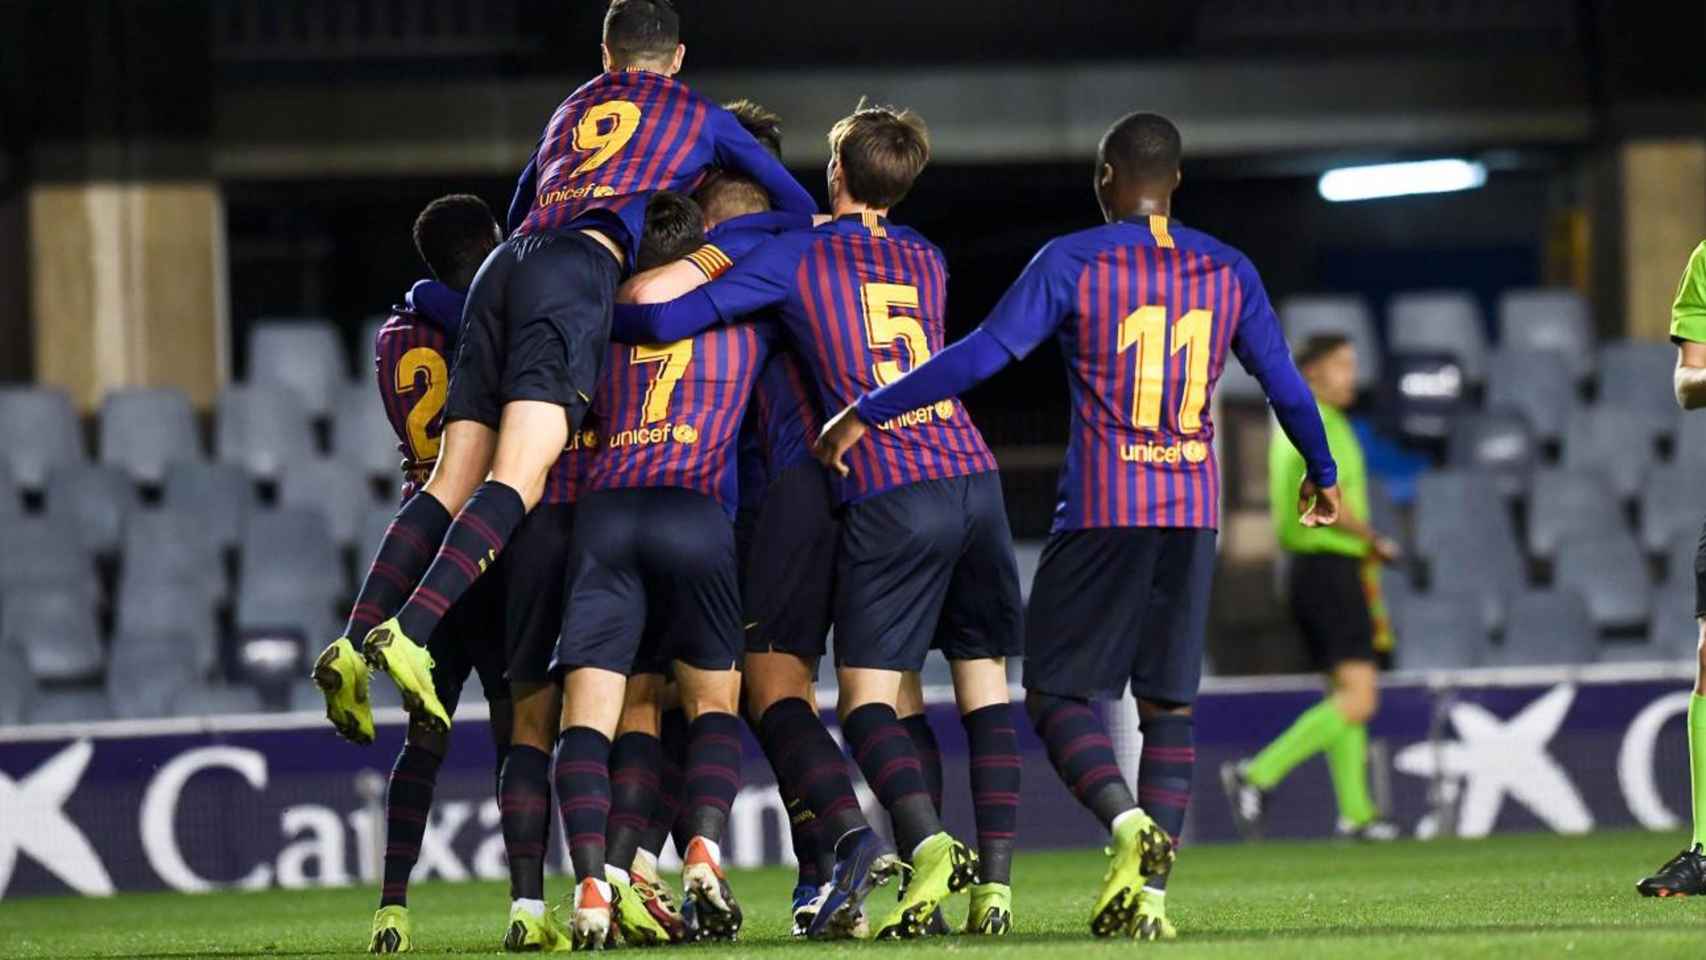 El Barça B celebrando un gol en el Mini Estadi / FC Barcelona